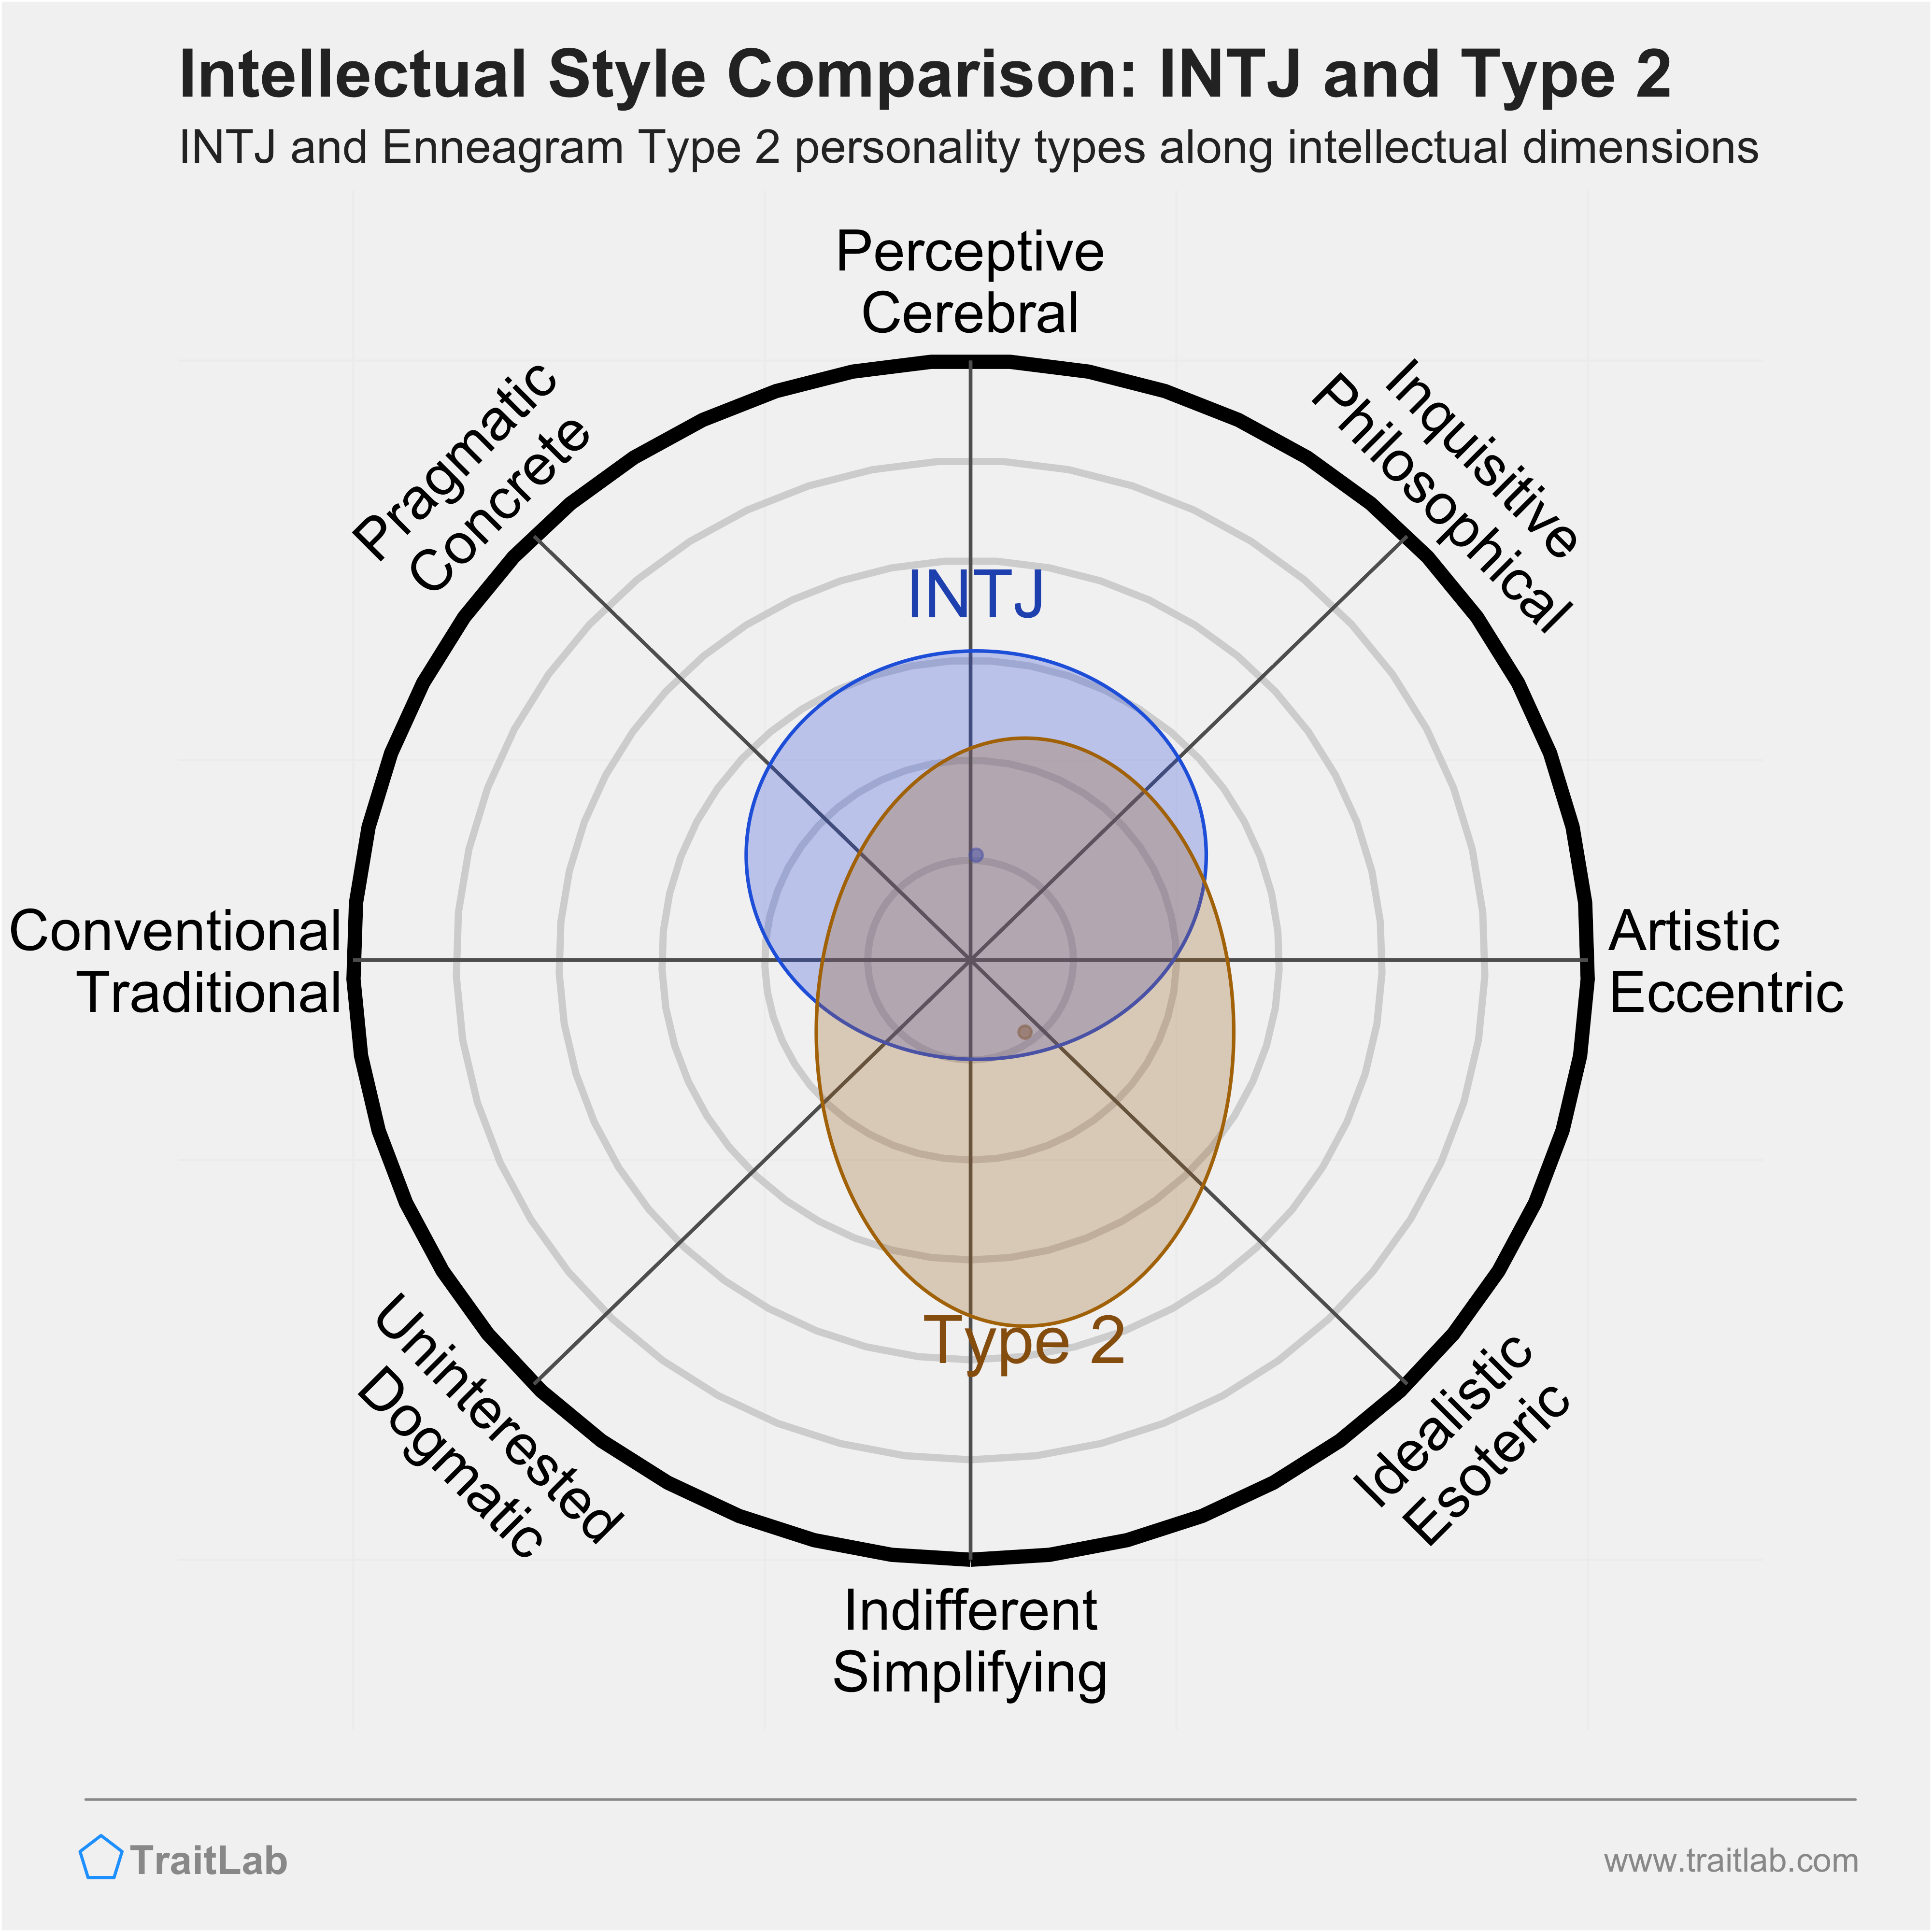 INTJ and Type 2 comparison across intellectual dimensions